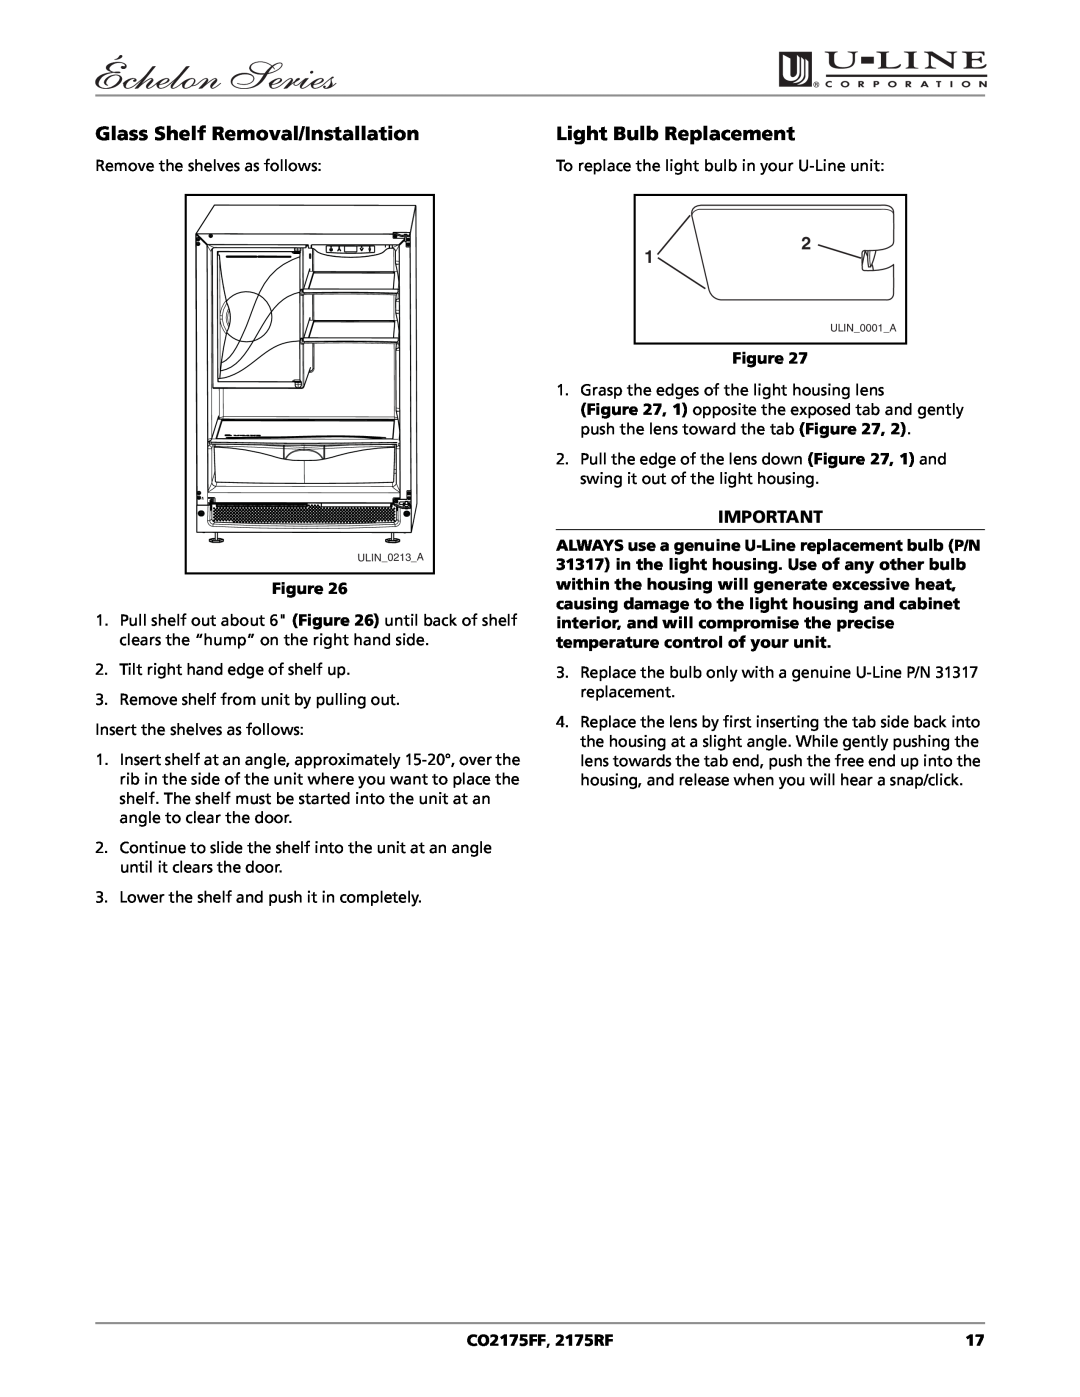 U-Line CO2175RF manual Glass Shelf Removal/Installation, Light Bulb Replacement, CO2175FF, 2175RF 